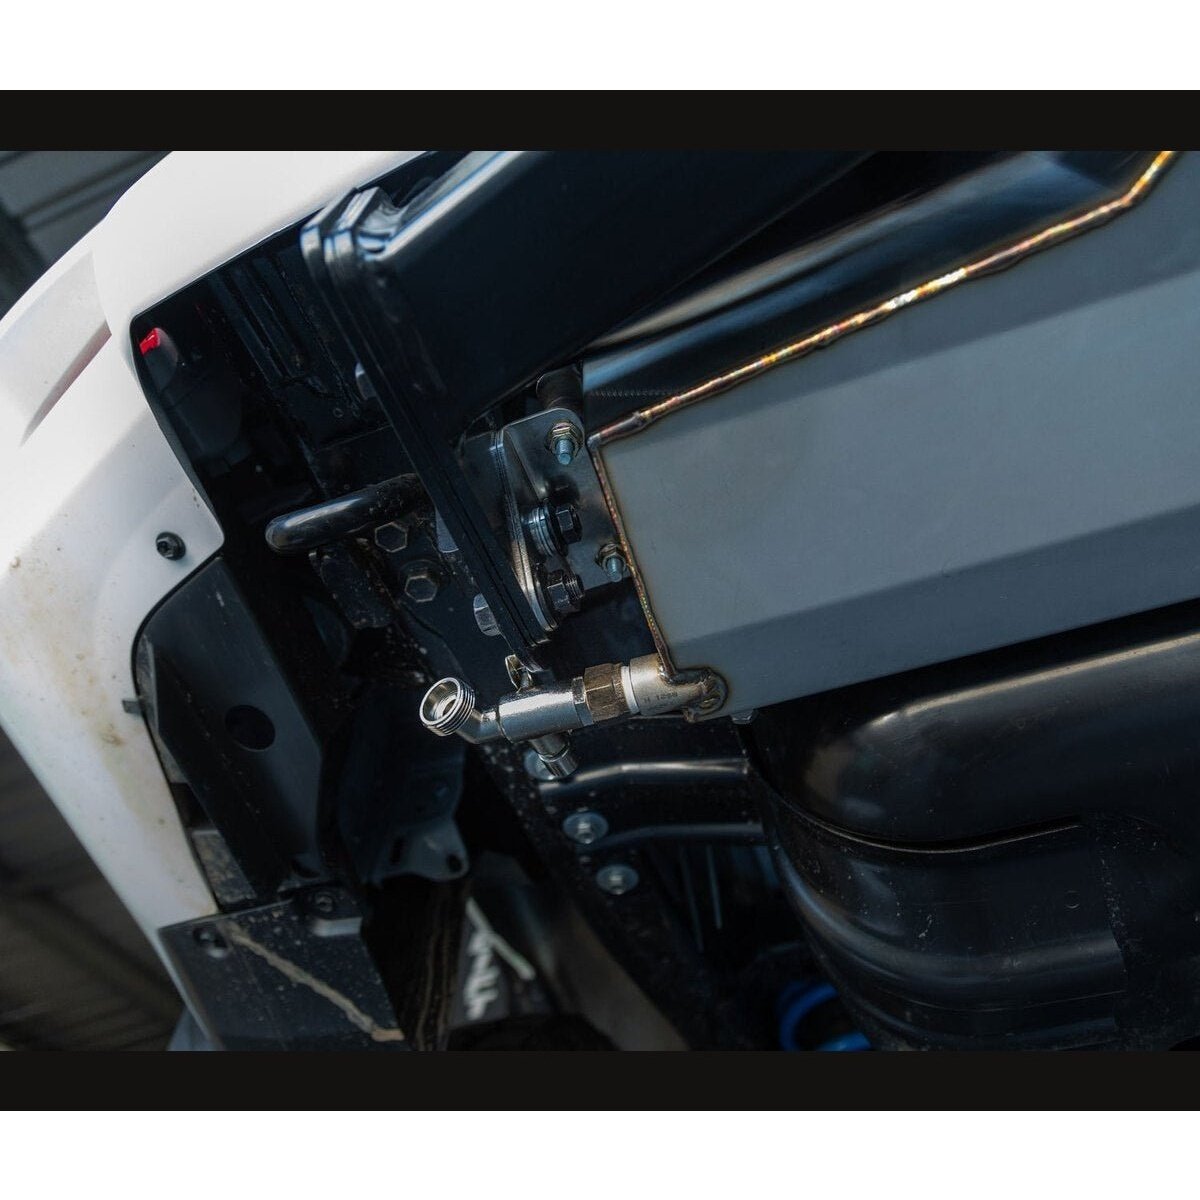 Underbody Water Tank to suit Toyota Prado 150 / Lexus GX 460 - AMD Touring